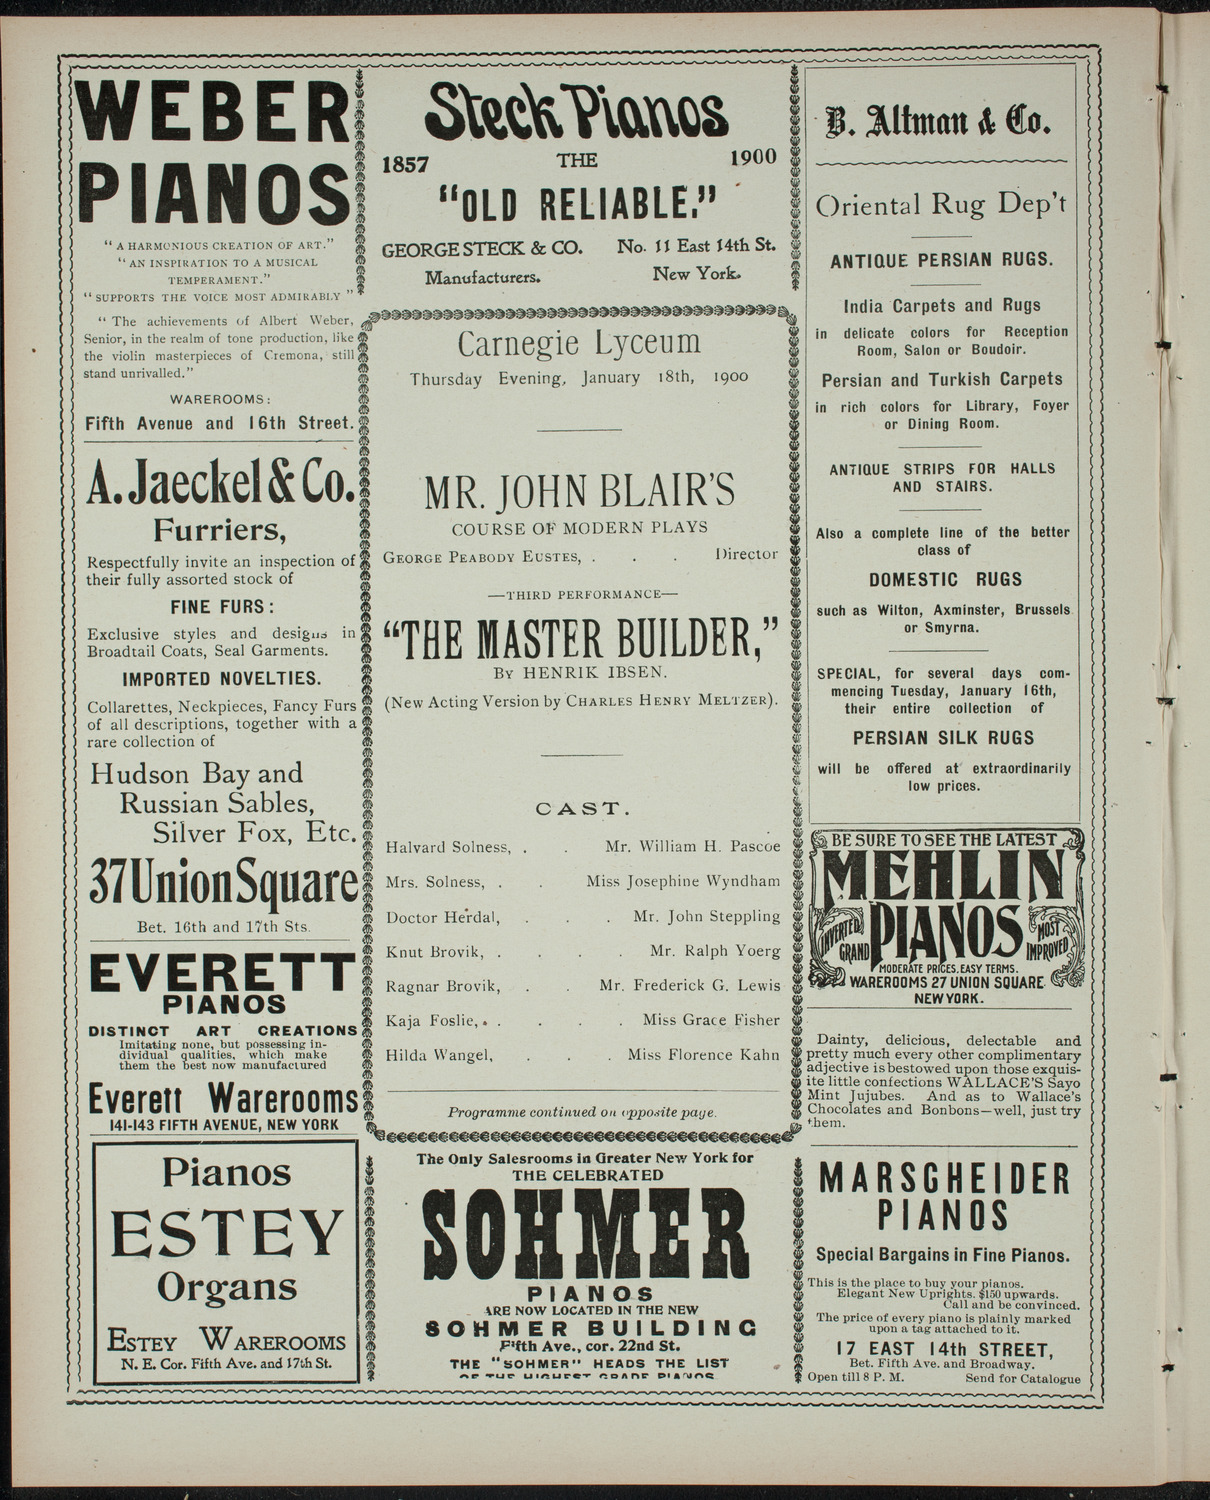 Mr. John Blair's Course of Modern Plays, January 18, 1900, program page 2